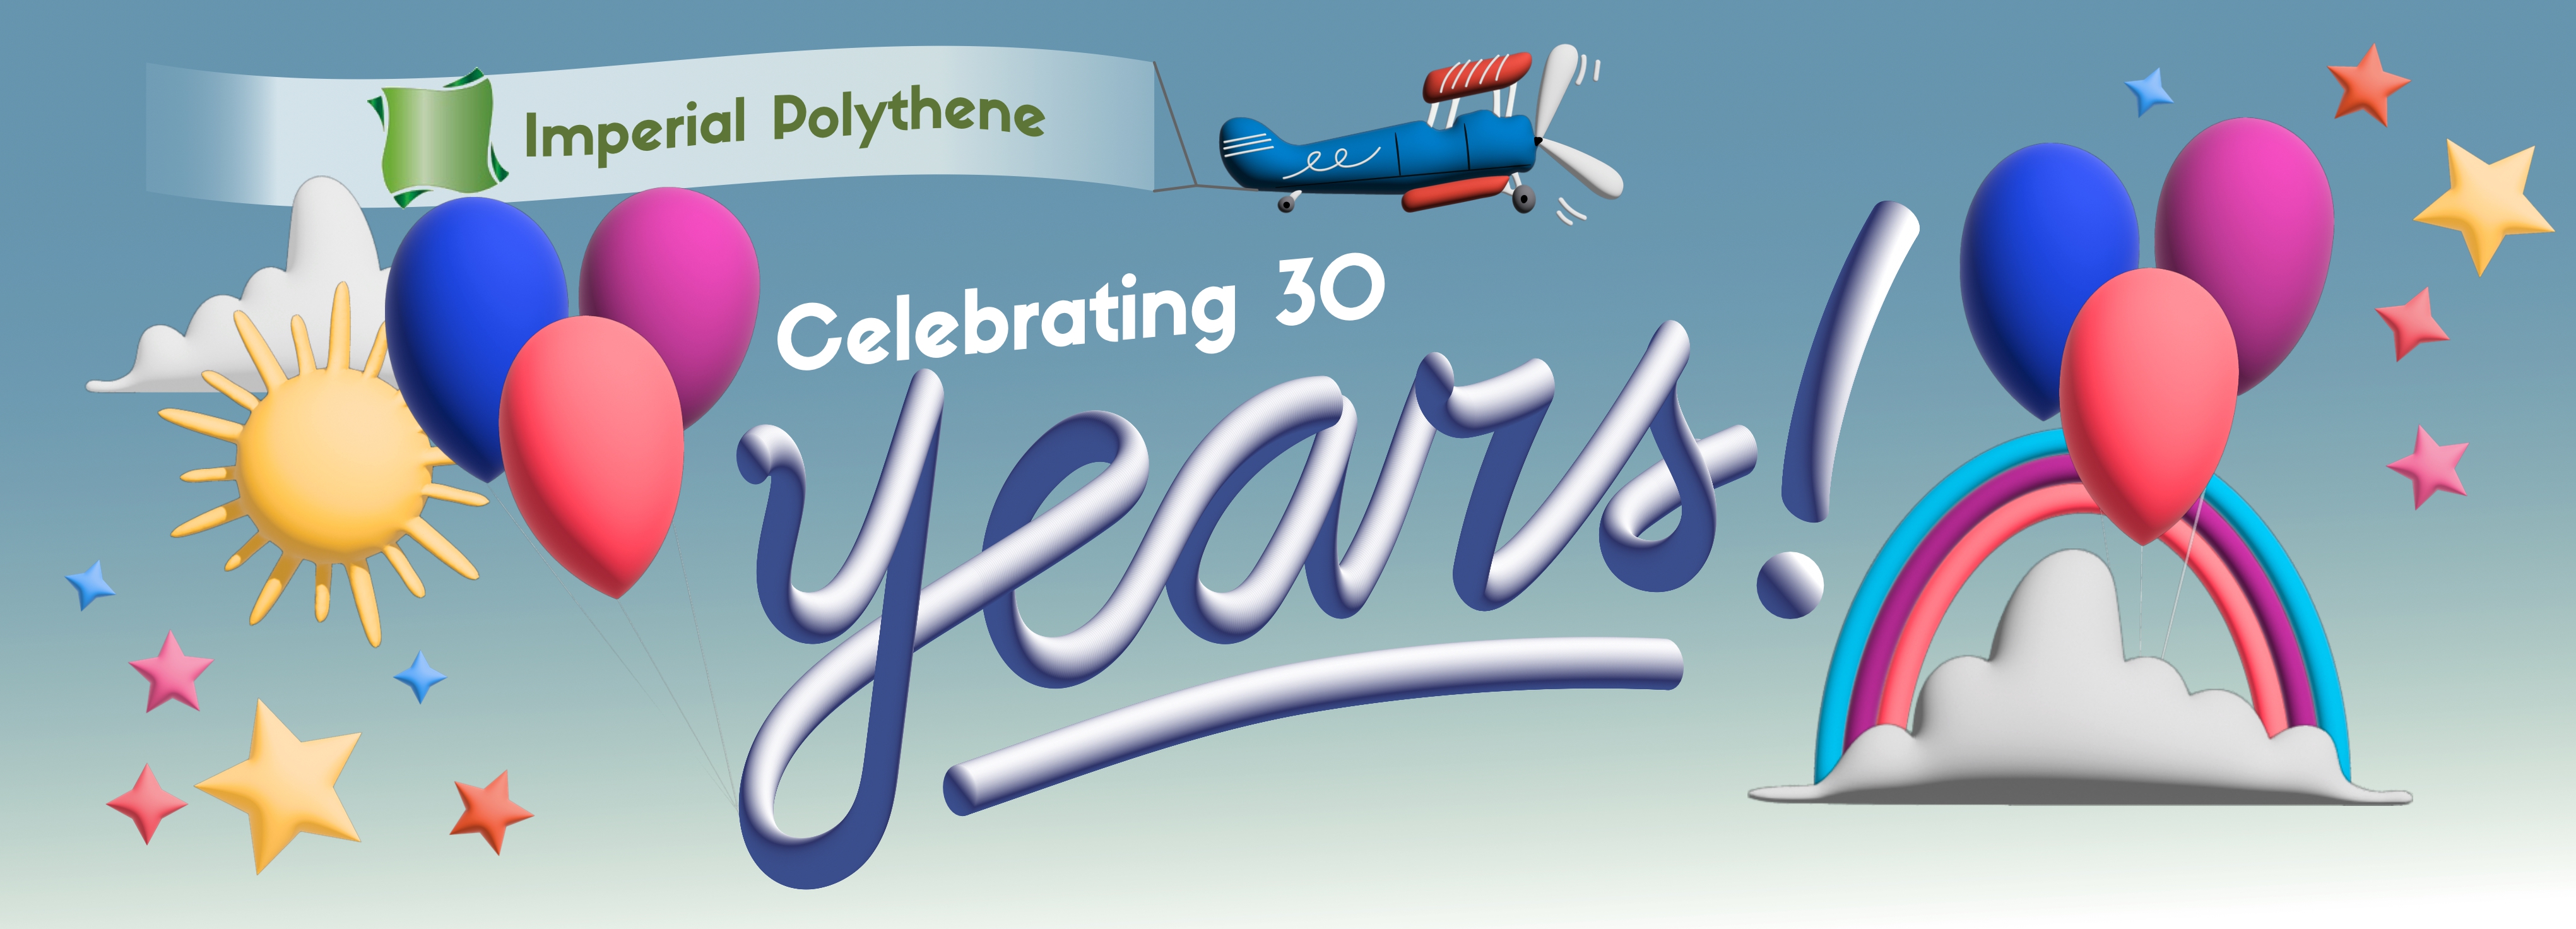 Imperial Polythene Ltd - Celebrating 30 Years